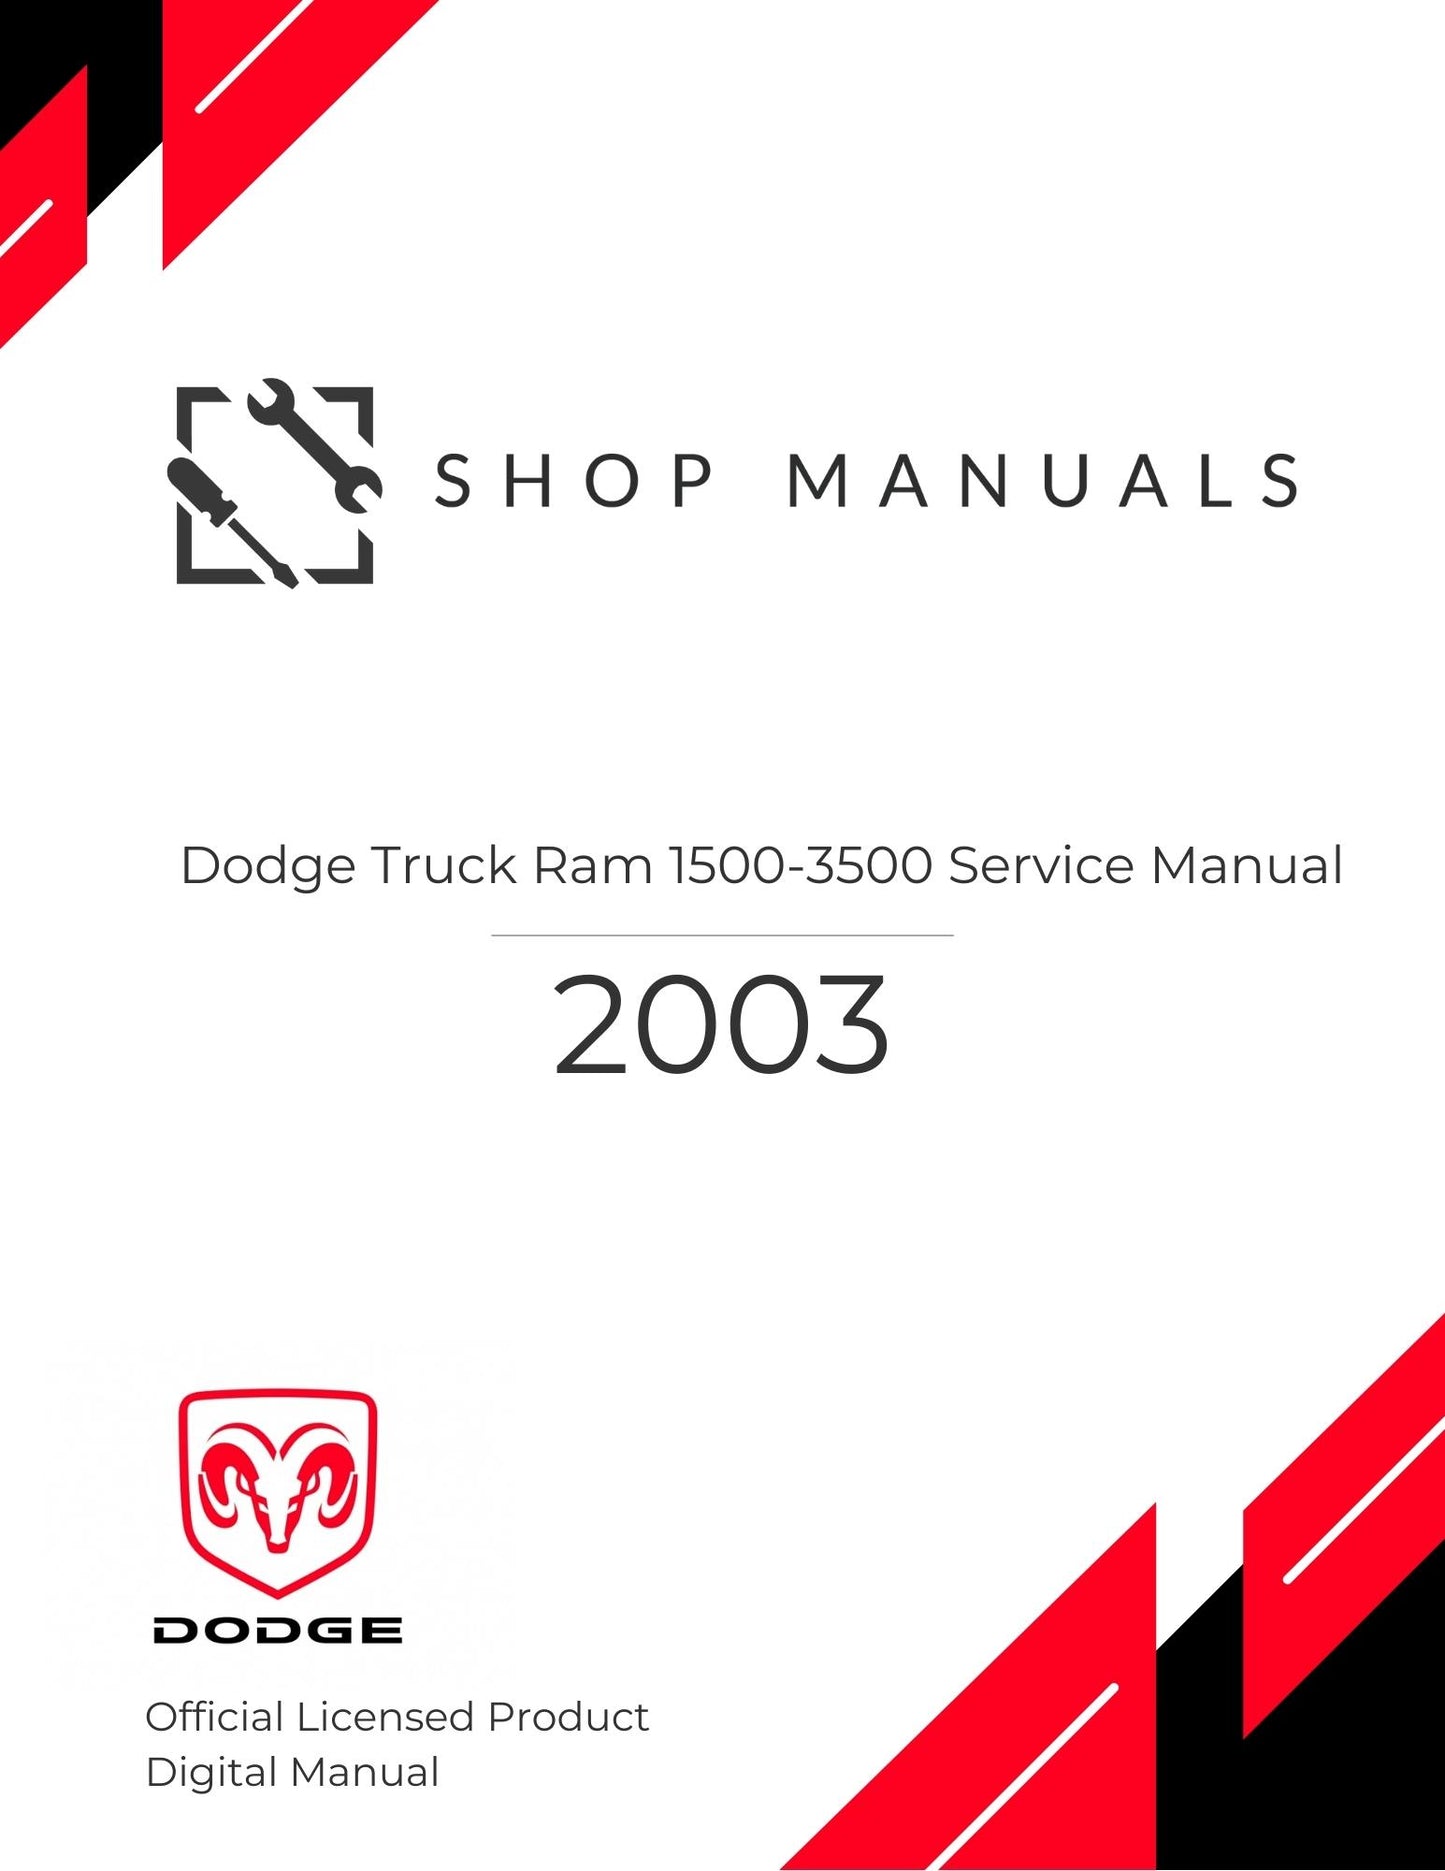 2003 Dodge Truck Ram 1500-3500 Service Manual